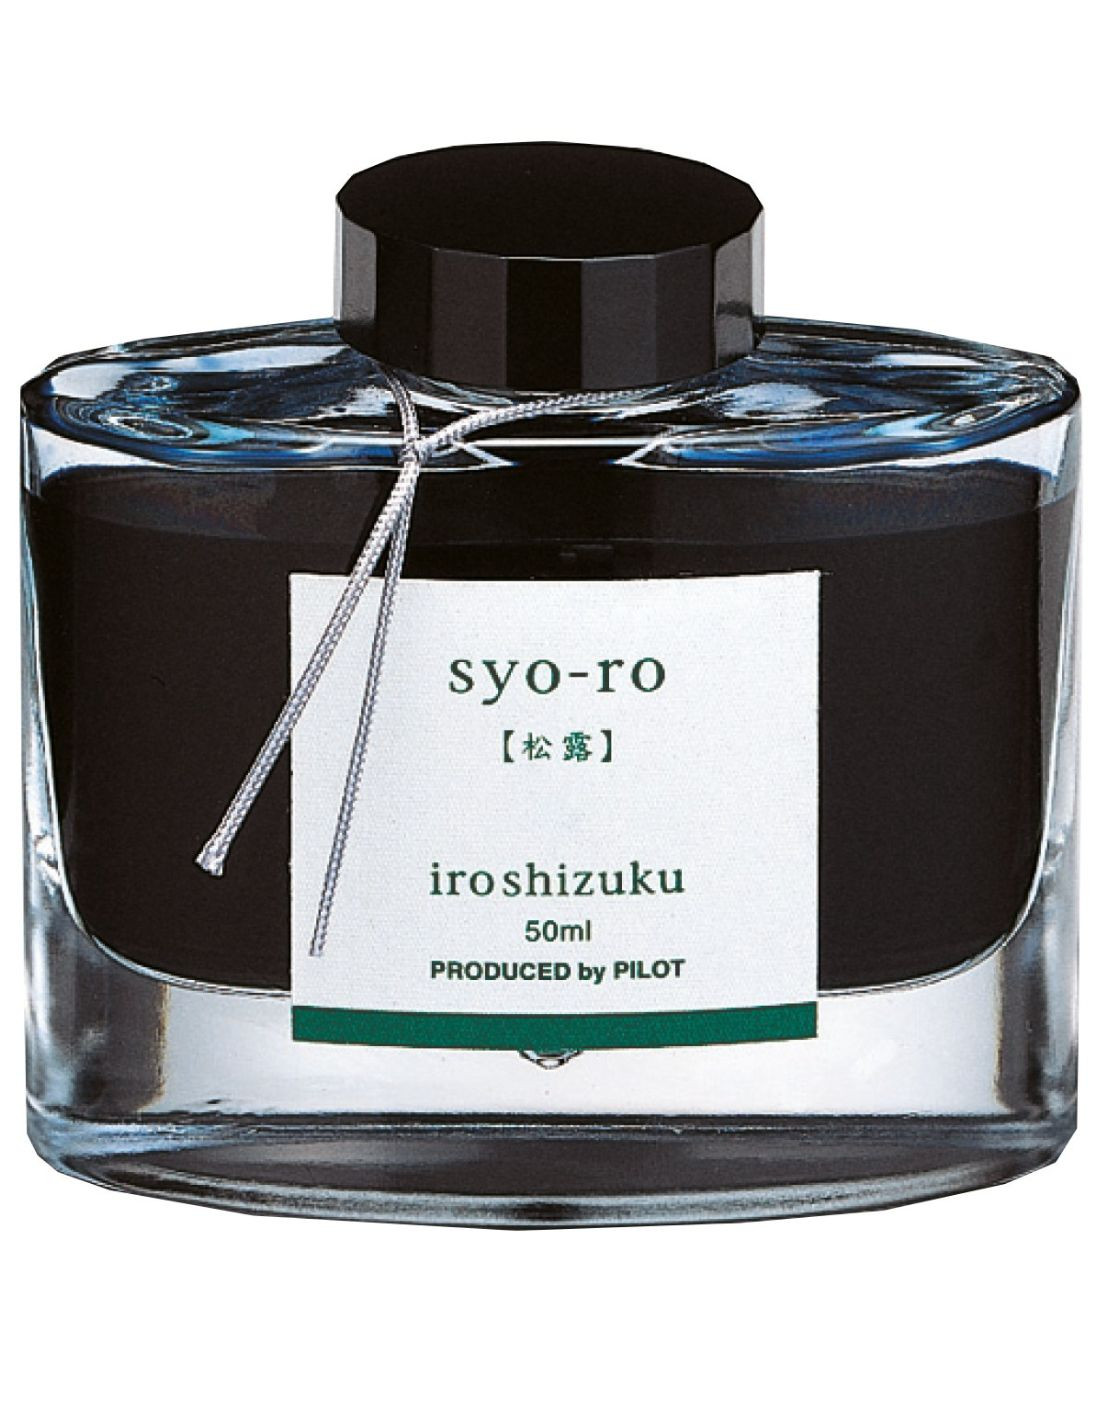 Iroshizuku Ink - Bottle 50ml - Syo-ro - Pilot